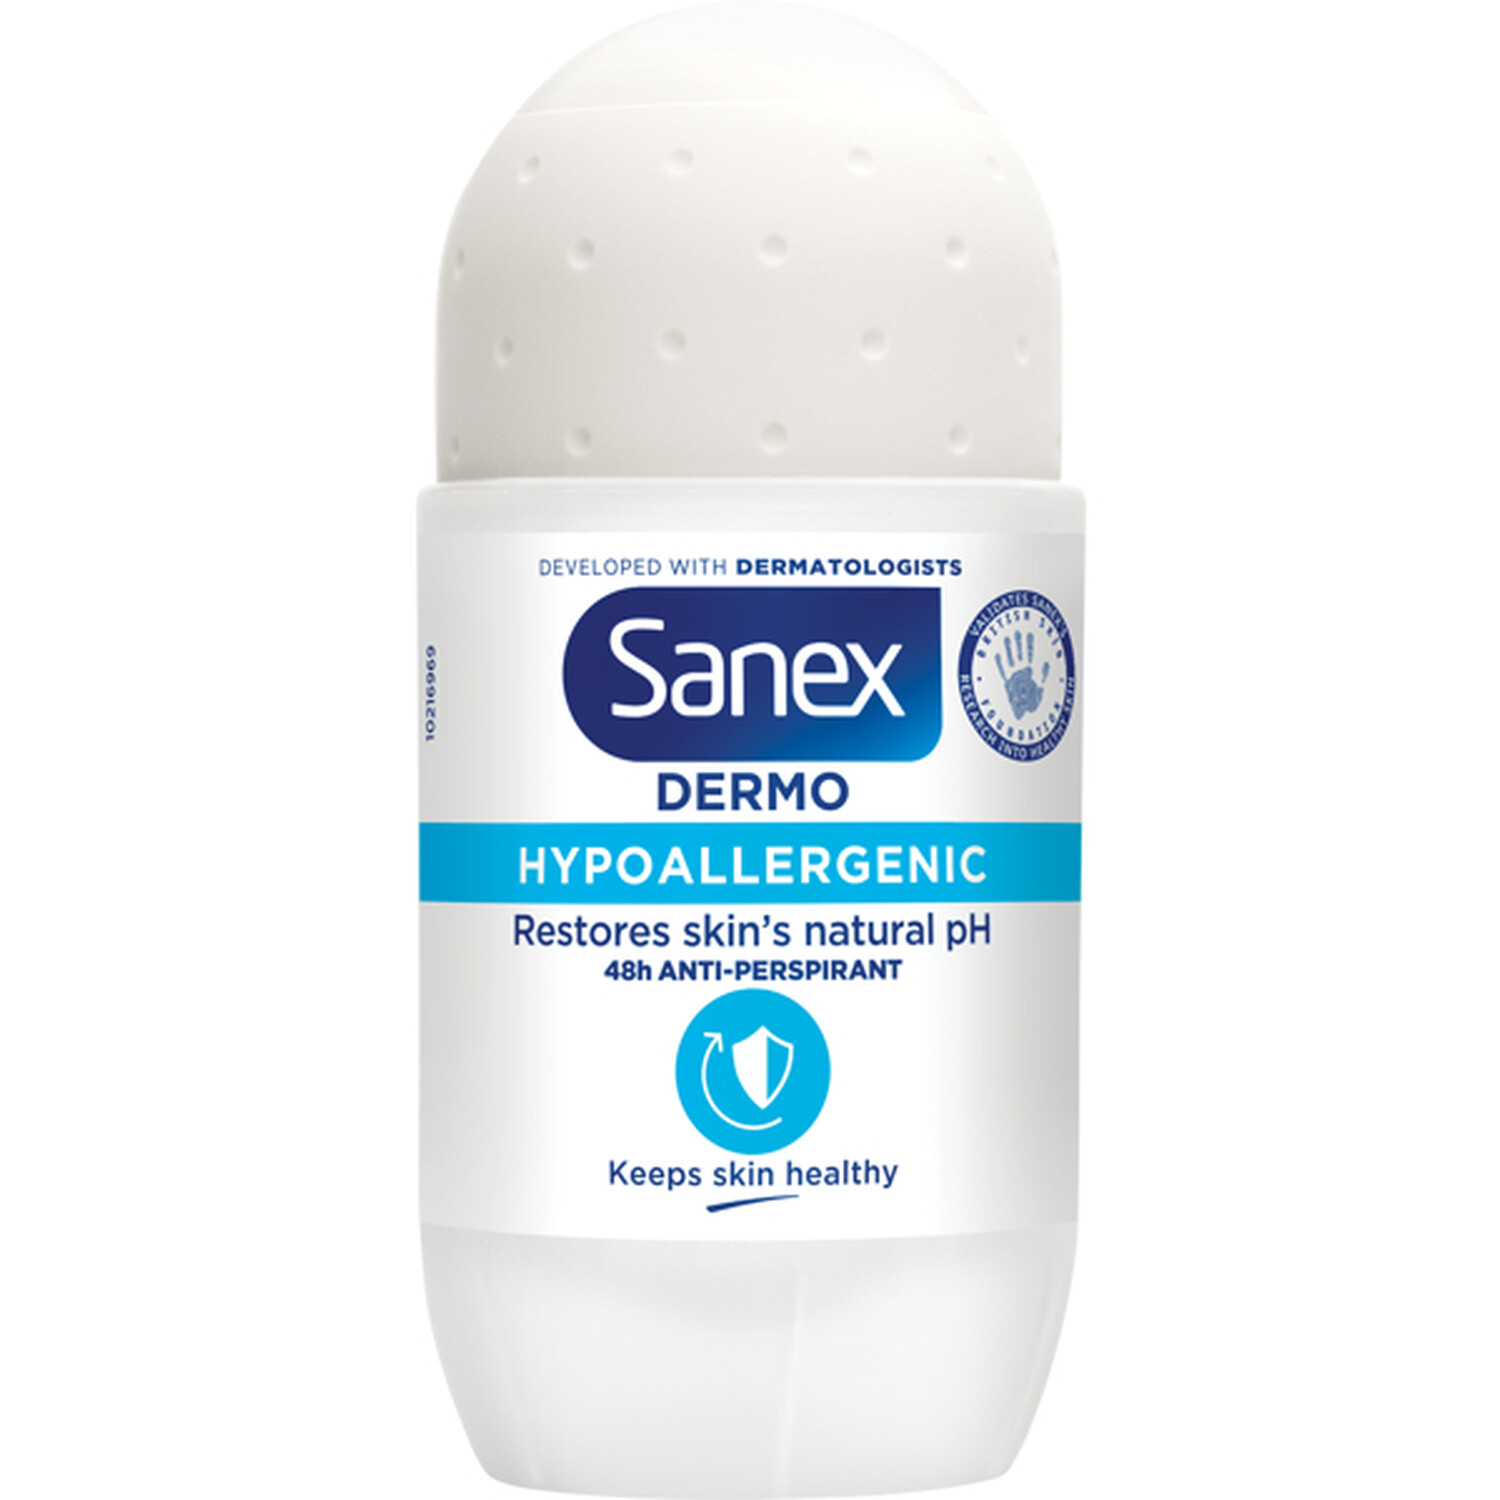 Sanex Dermo Hypoallergenic Anti-Perspirant Roll-On 50ml - White Image